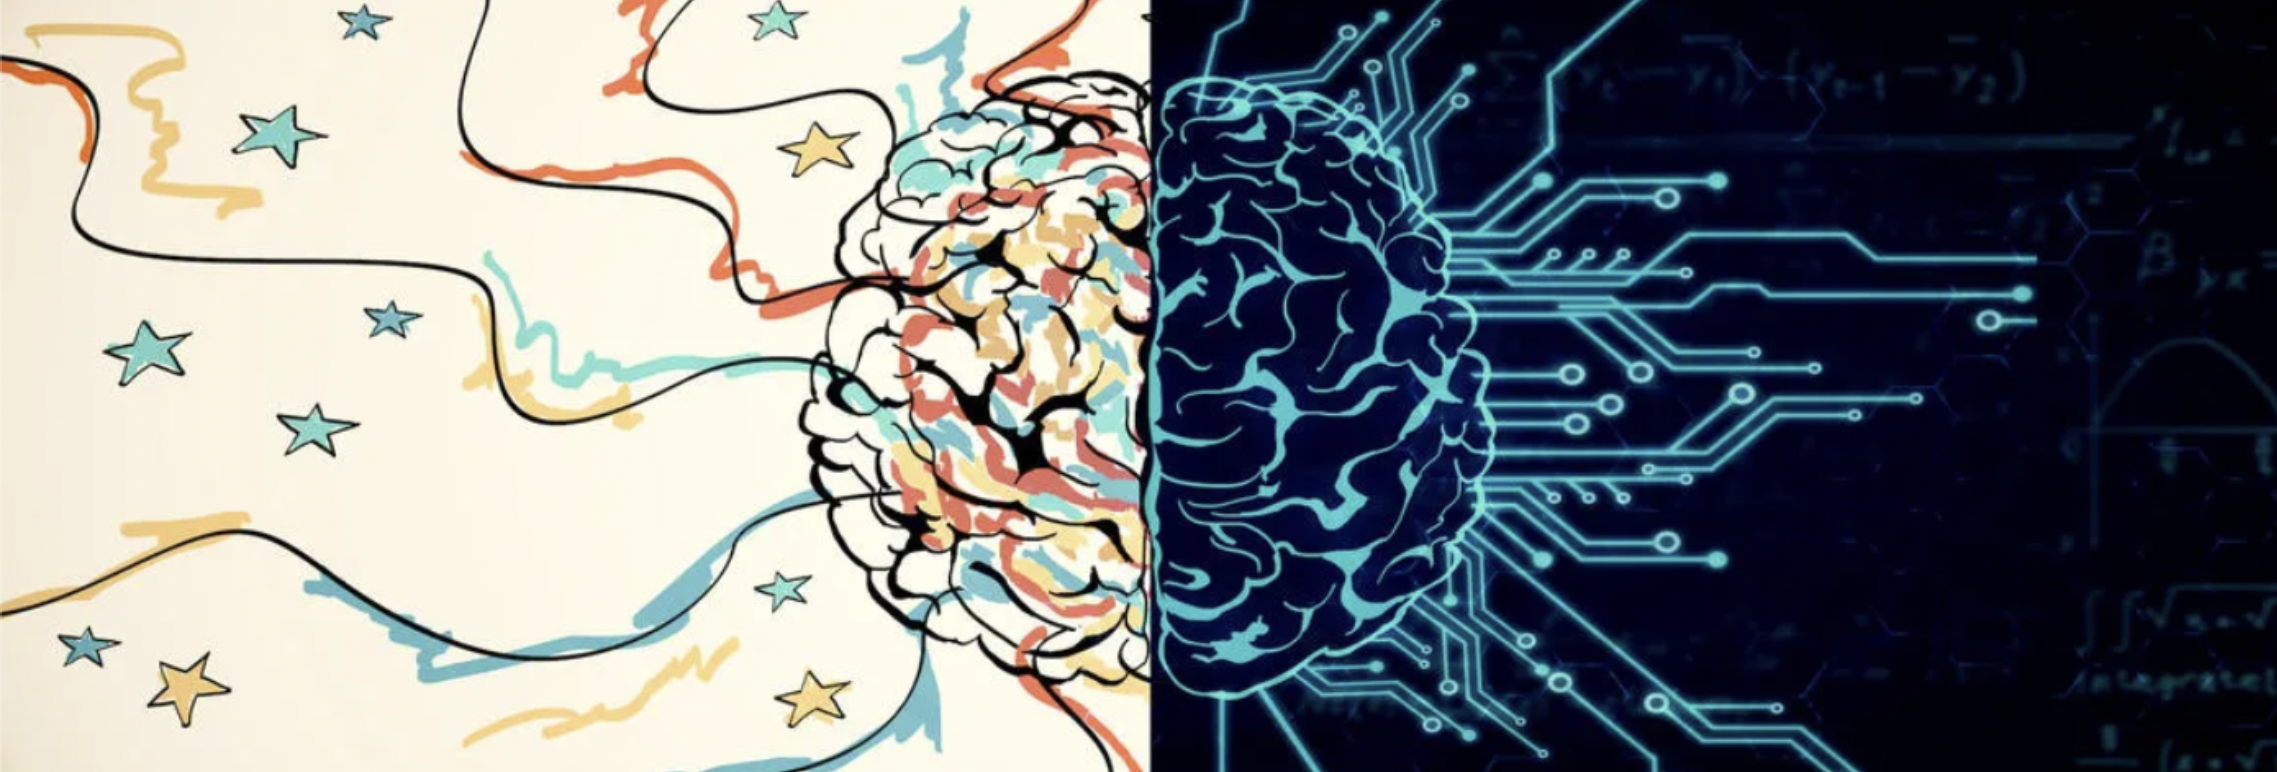 An art depicting how AI kills creativity